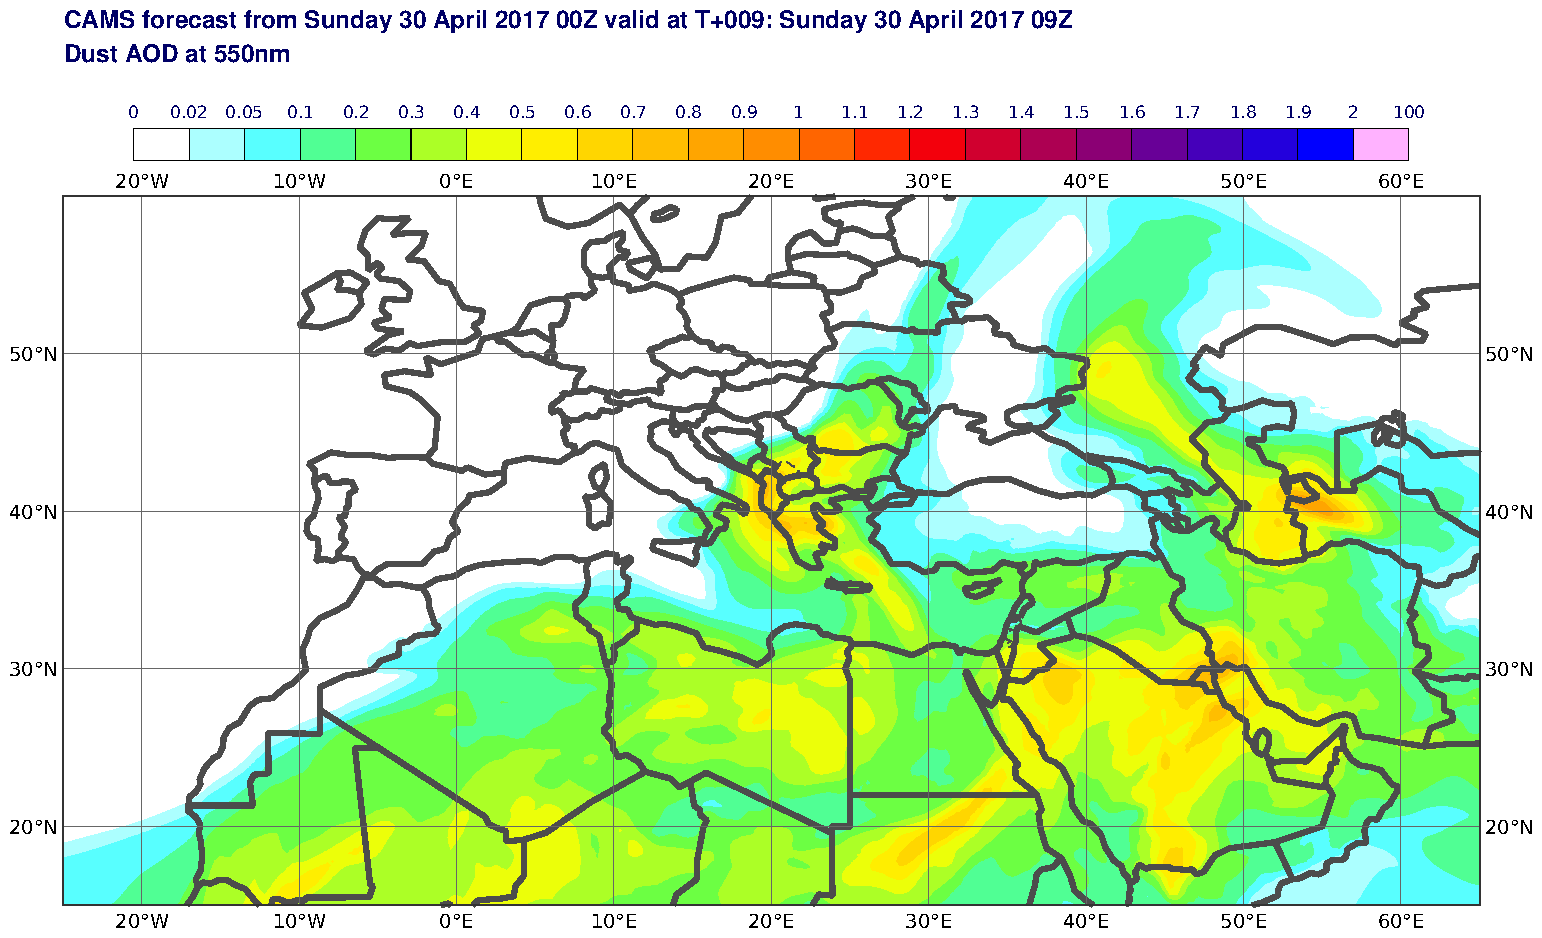 Dust AOD at 550nm valid at T9 - 2017-04-30 09:00